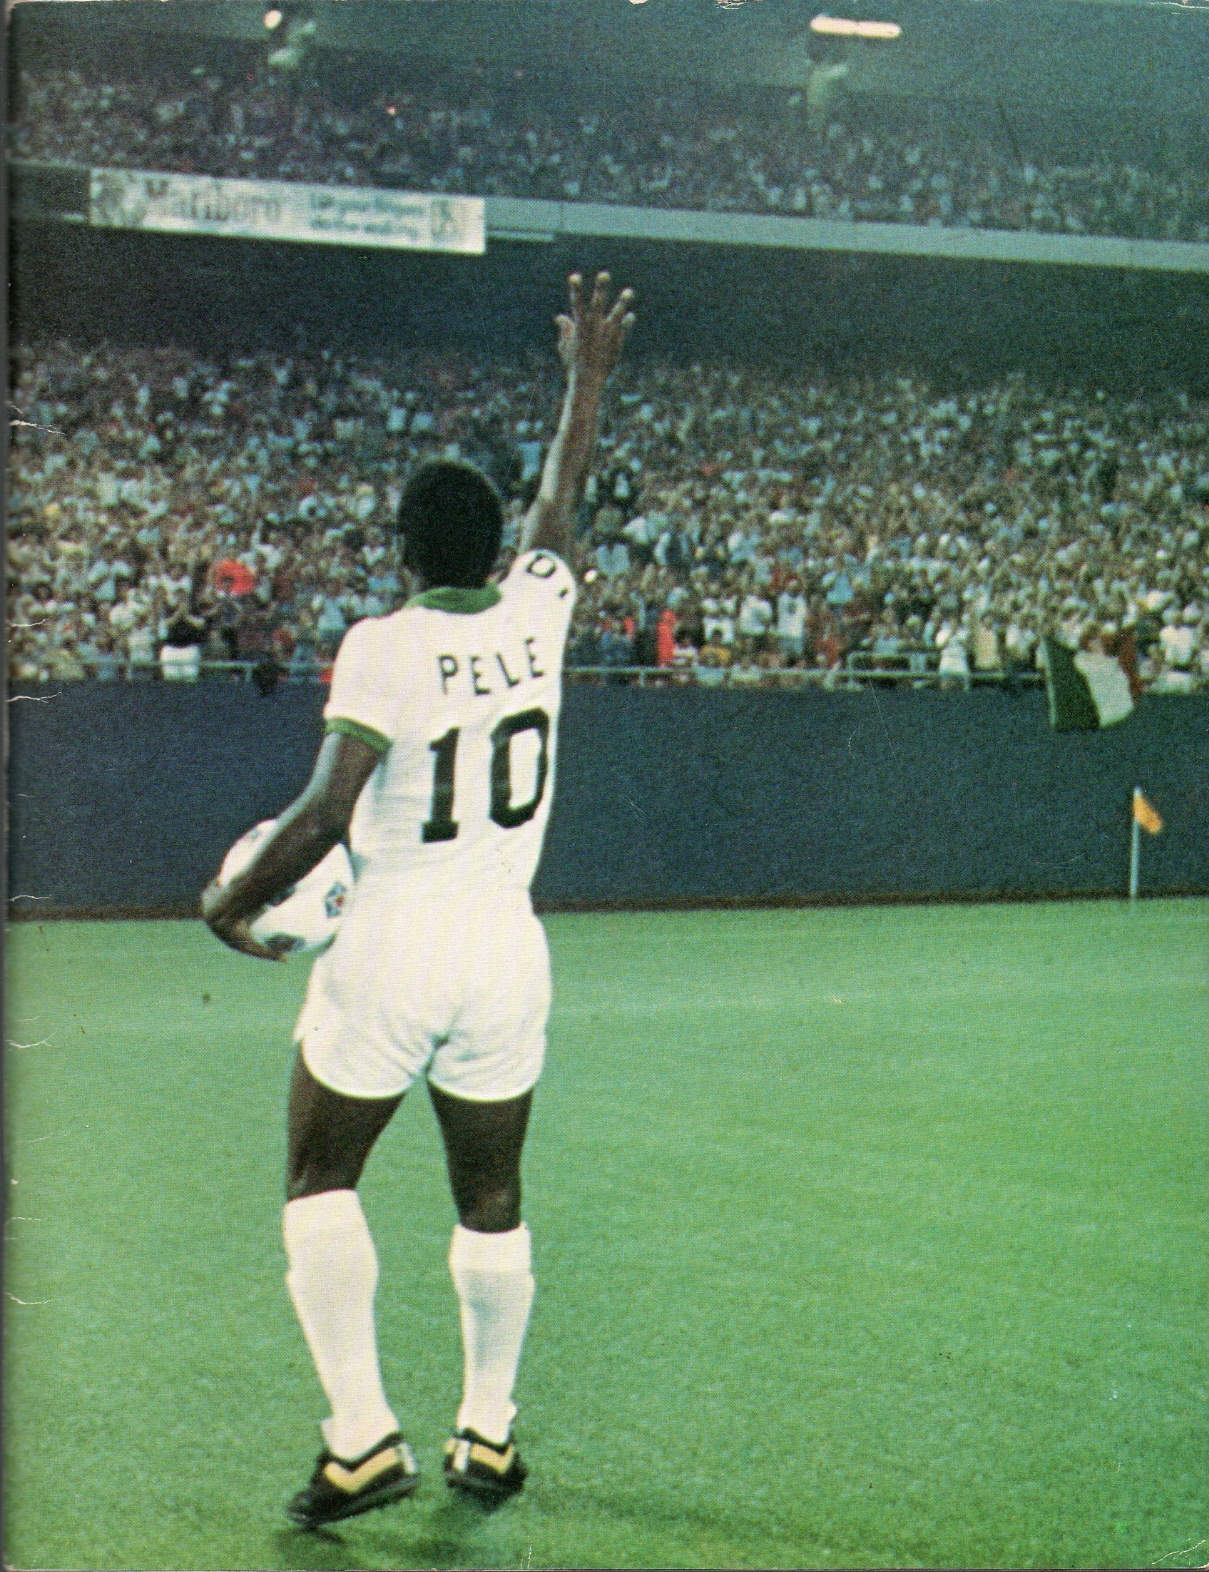 1977 Pele Farewell Match Program